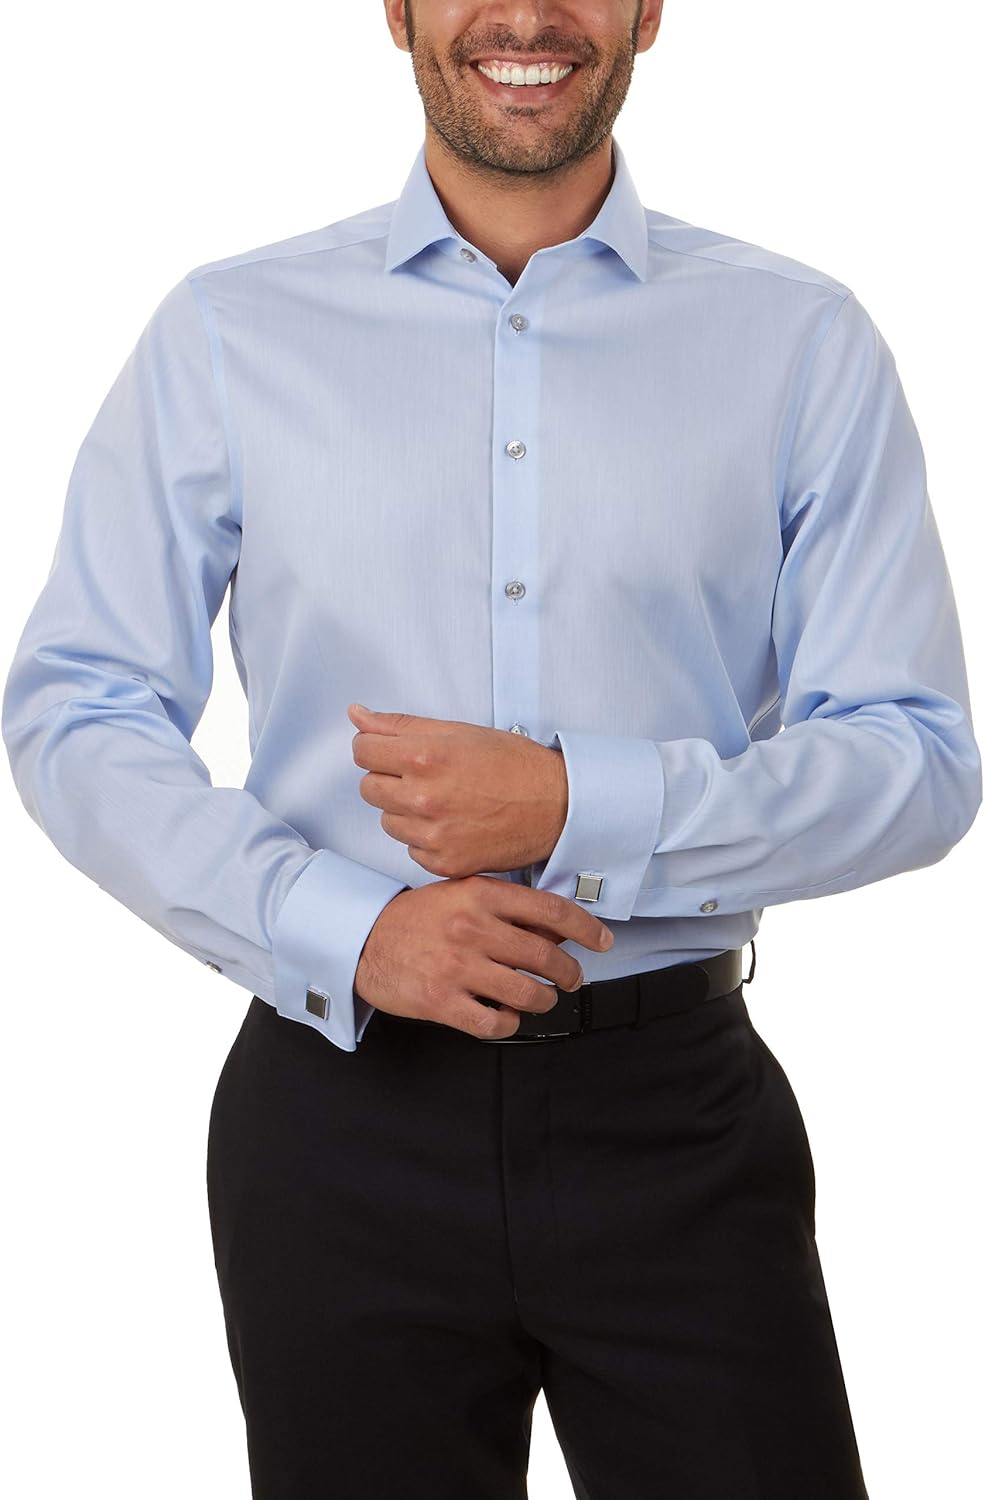 WHITE FAST SHIP Select Size Kirkland Signature Men's Button Down Dress Shirt 